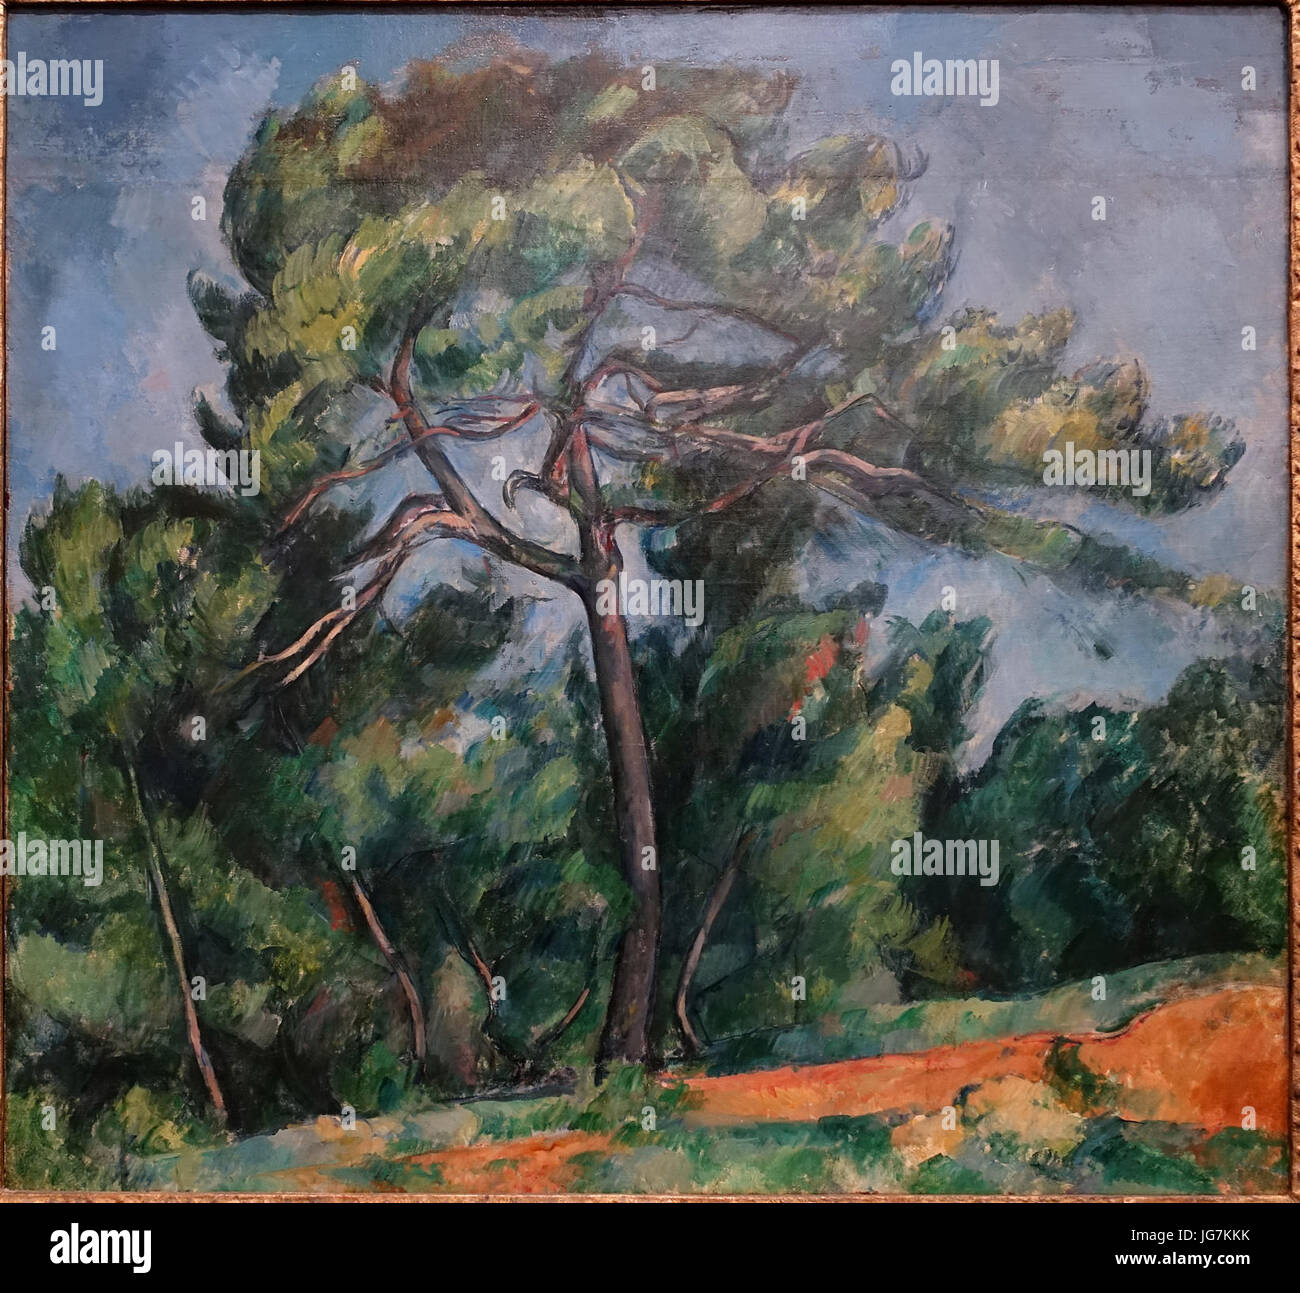 The Great Pine by Paul Cezanne, 1890-1896, oil on canvas - Museu de Arte de São Paulo - DSC07139 Stock Photo